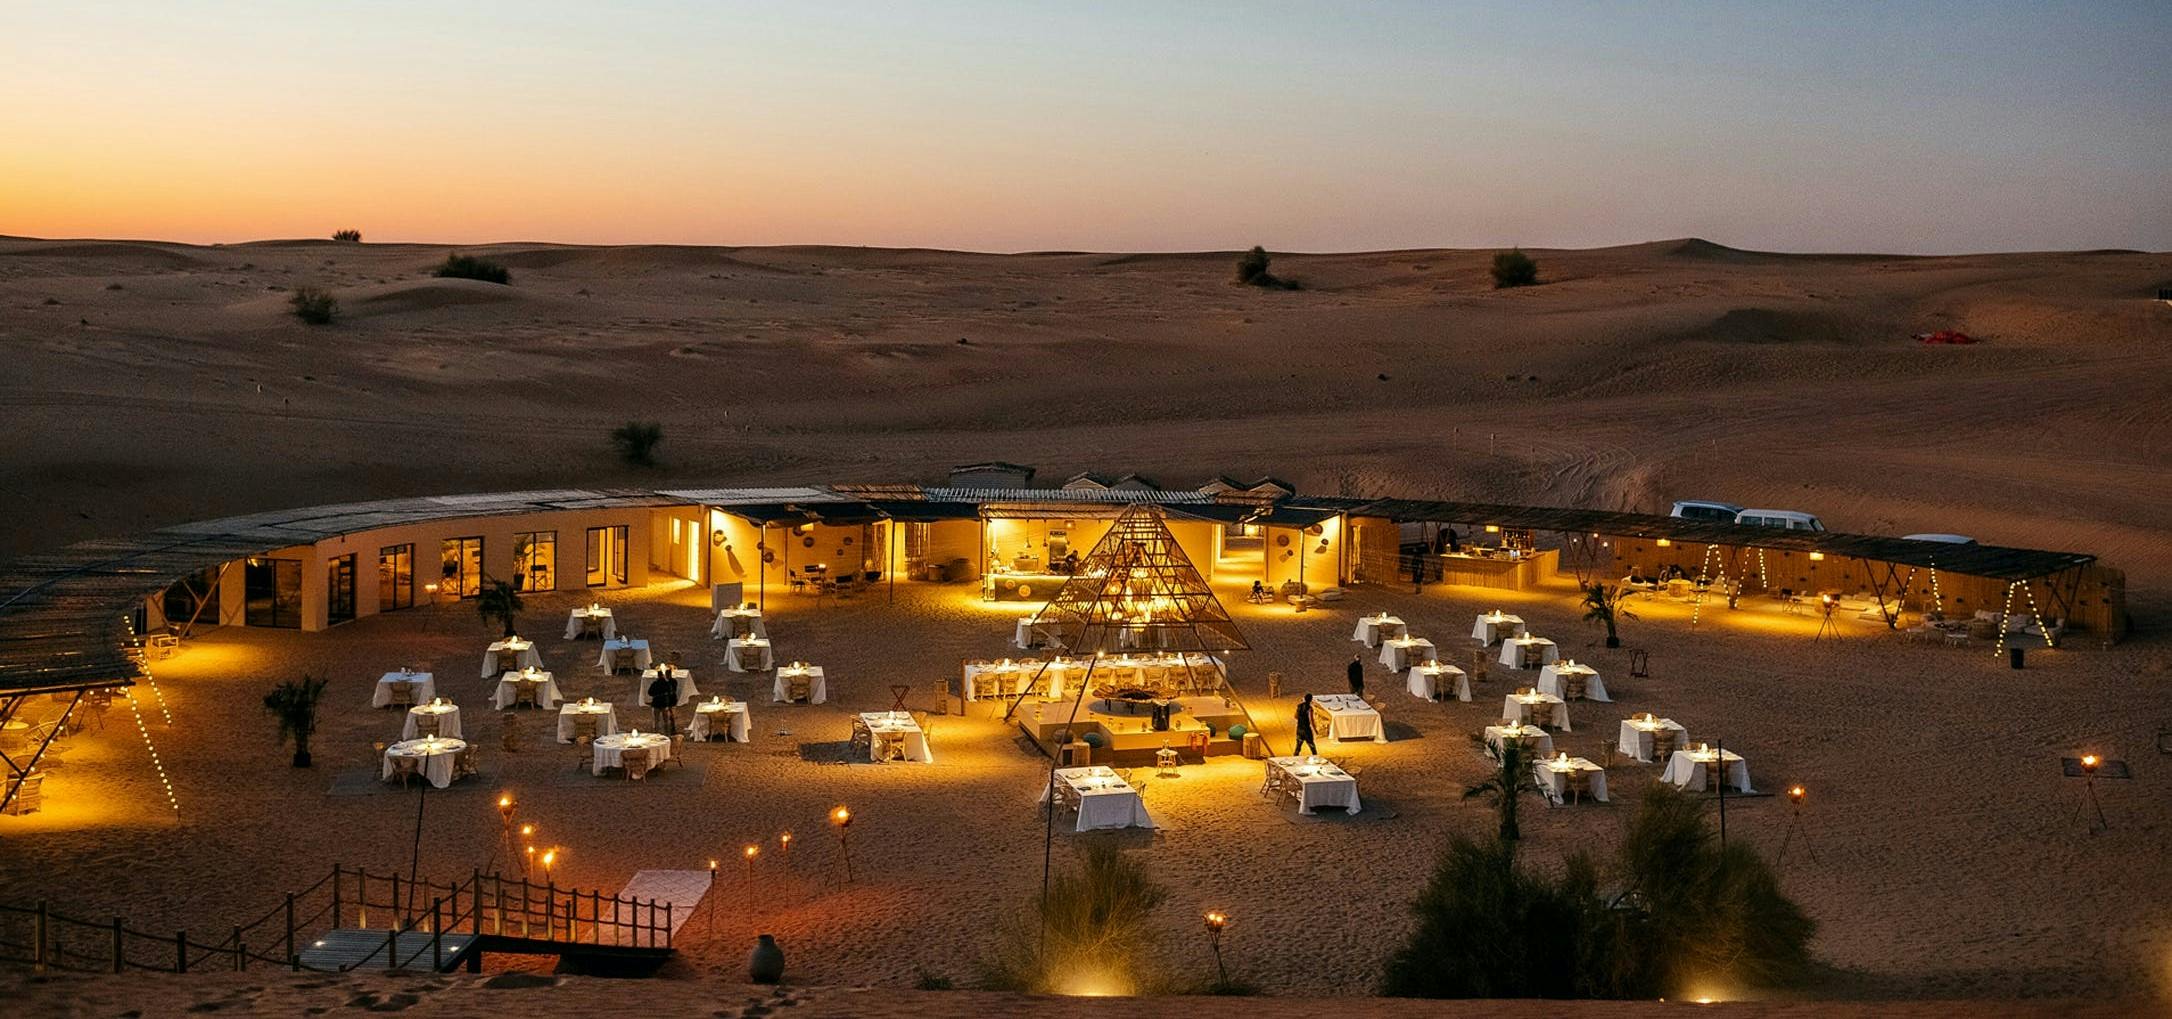 Sonara camp desert experience and dinner Musement